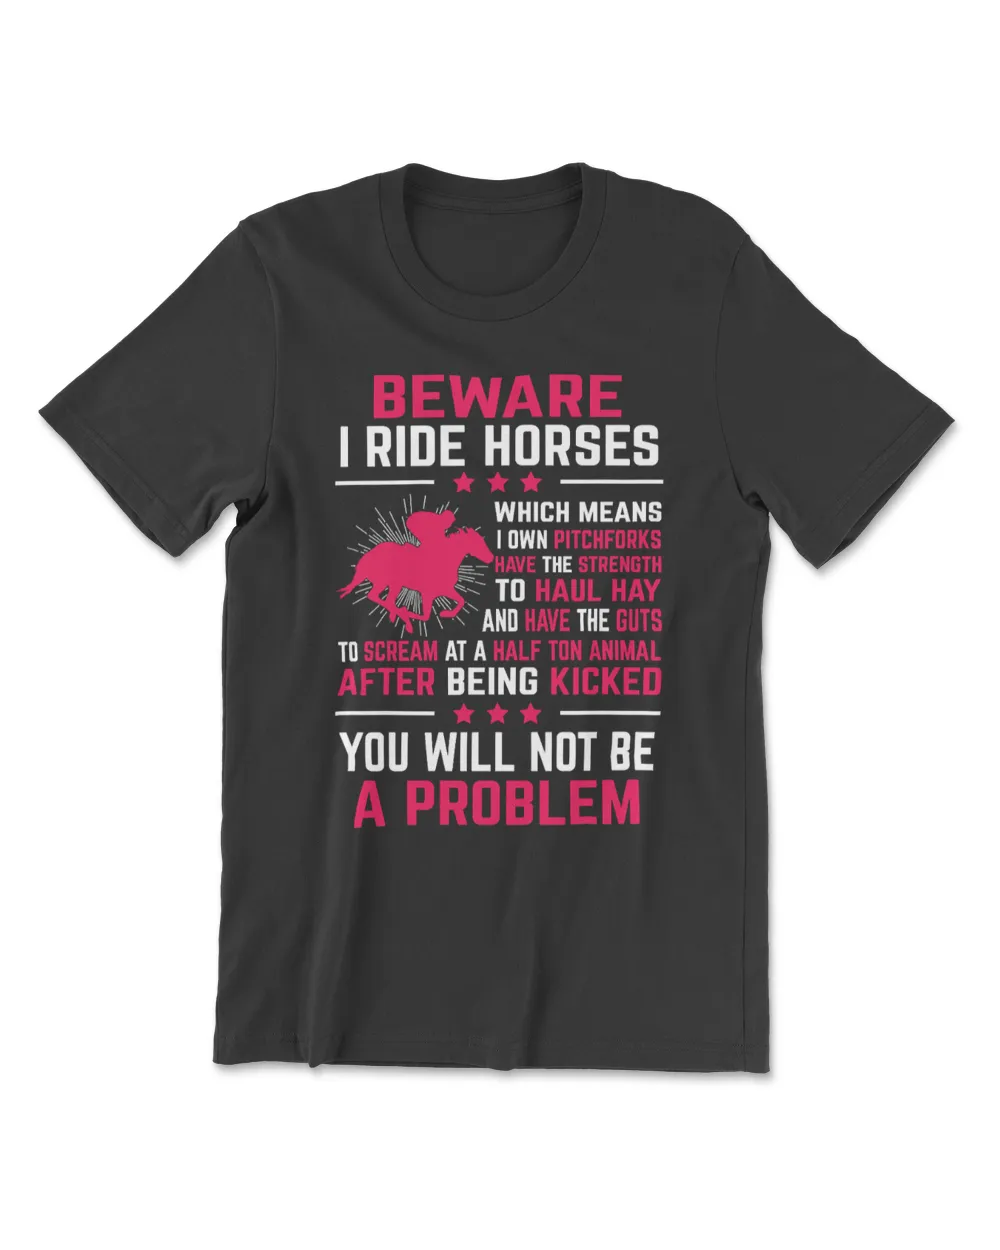 Horse HorseI Ride Horses Horse Lovers Equestrian Essential horseman cattle